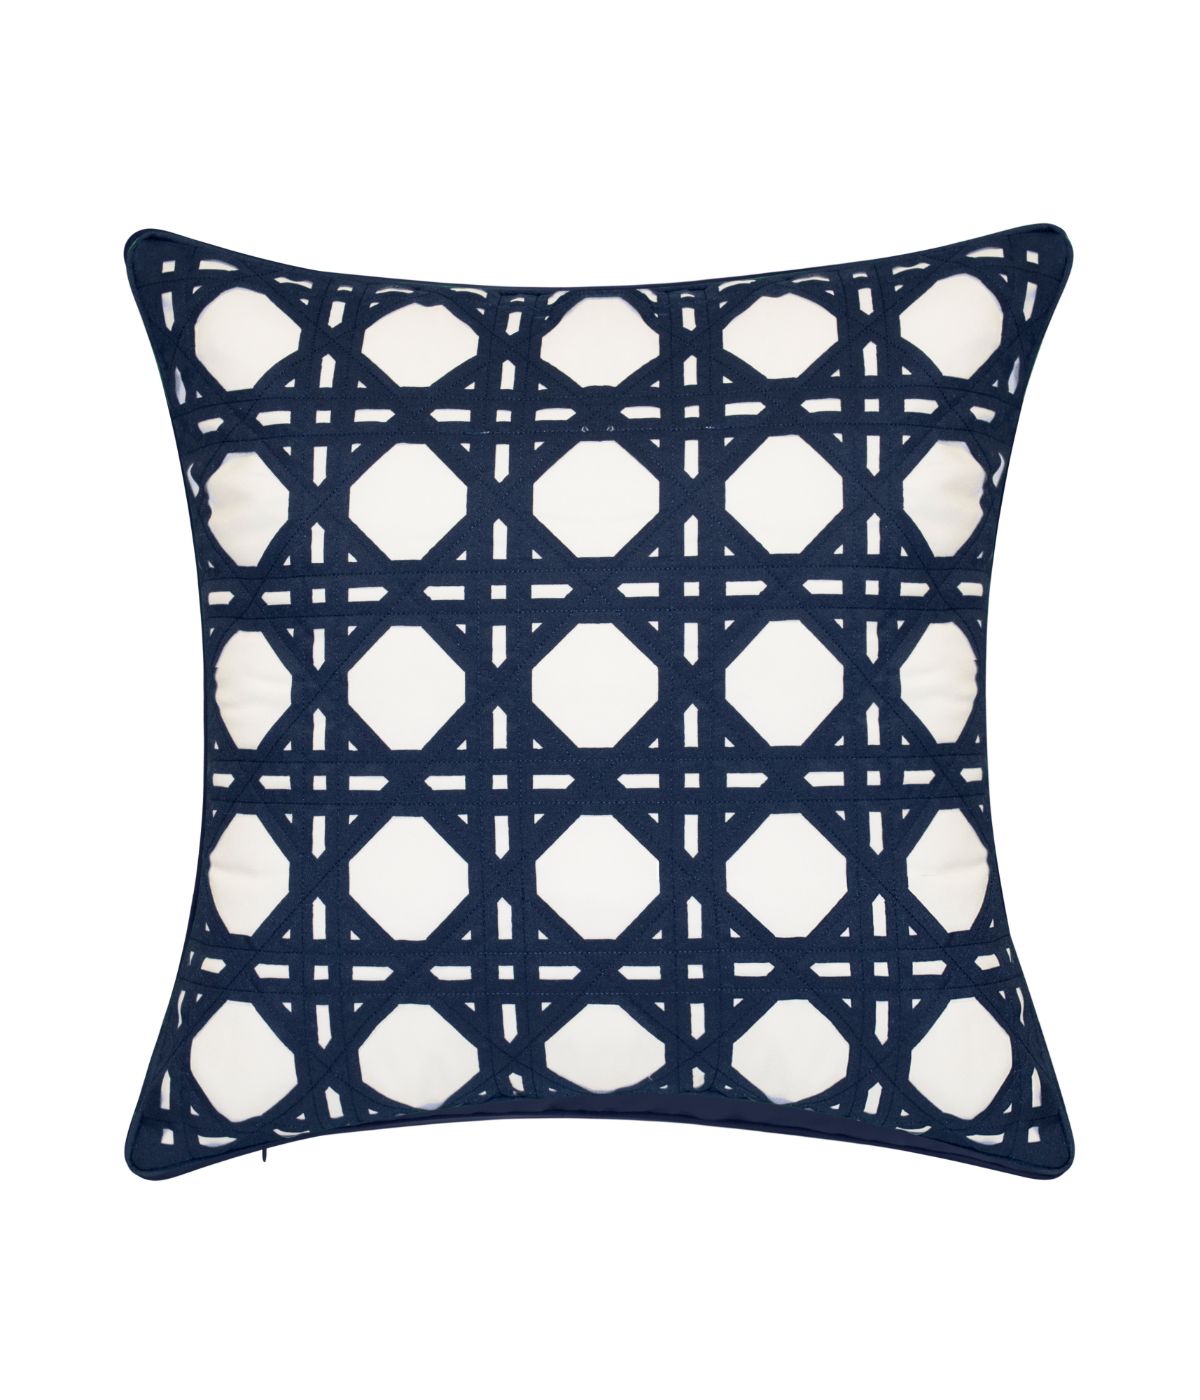 Rattan Look Geometric Decorative Pillow Navy